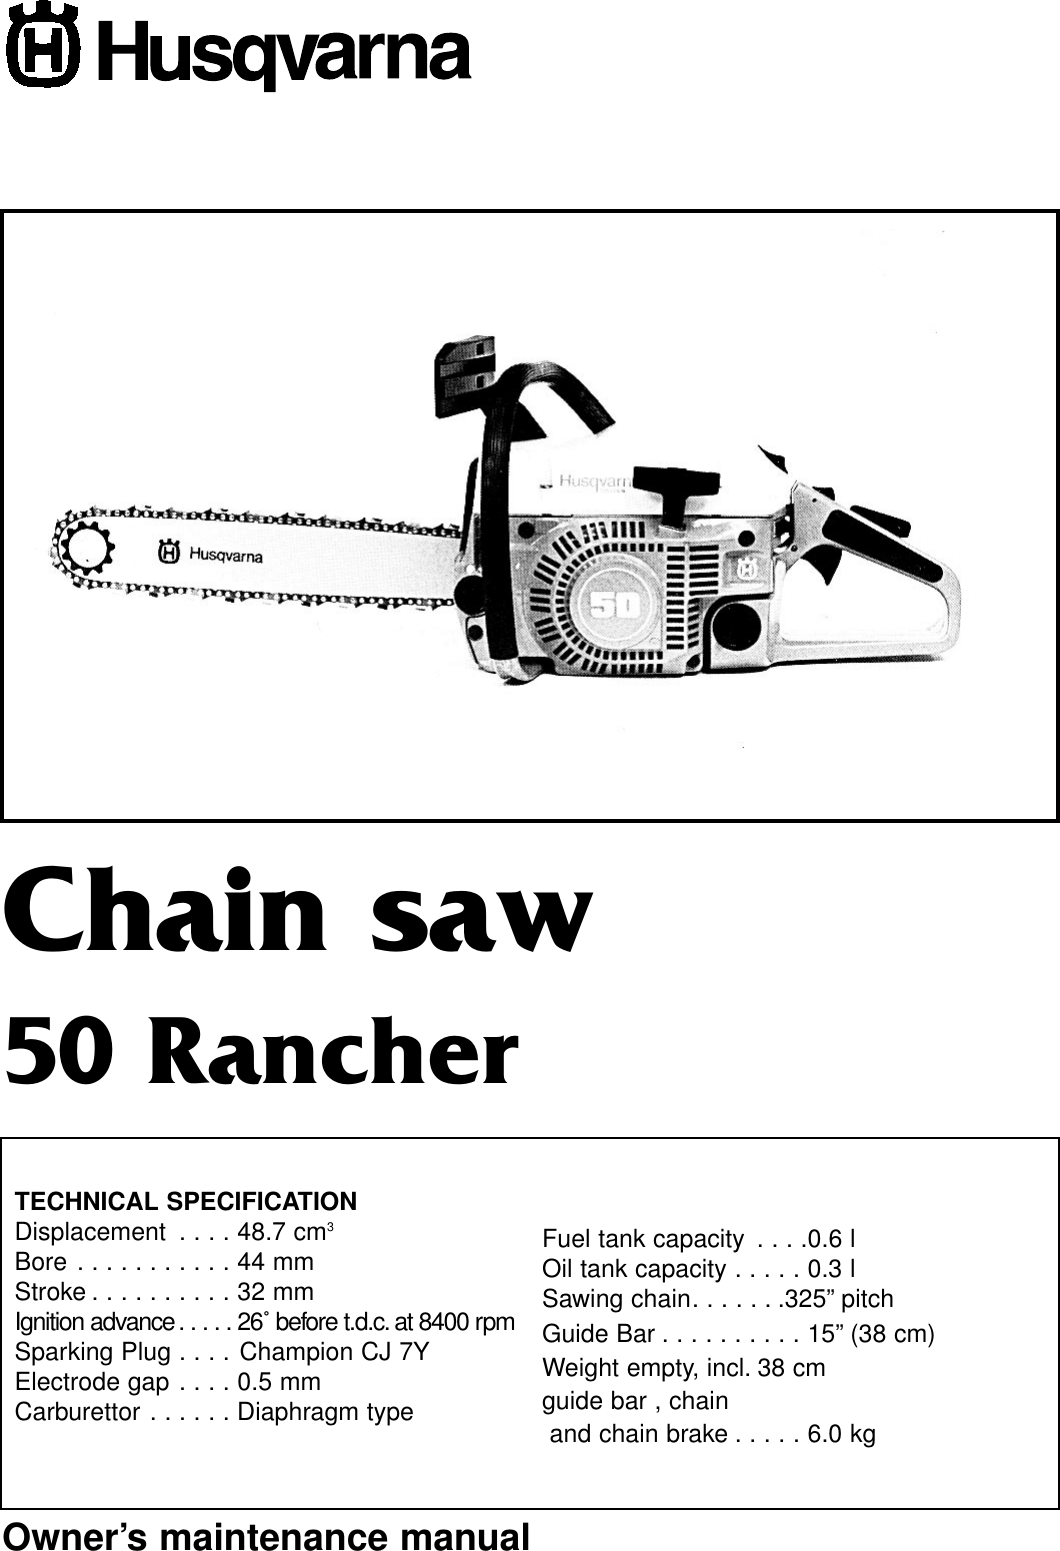 Page 1 of 8 - Husqvarna Husqvarna-50-Rancher-Users-Manual- OM, Rancher 50, 1982-11, Chain Saw  Husqvarna-50-rancher-users-manual